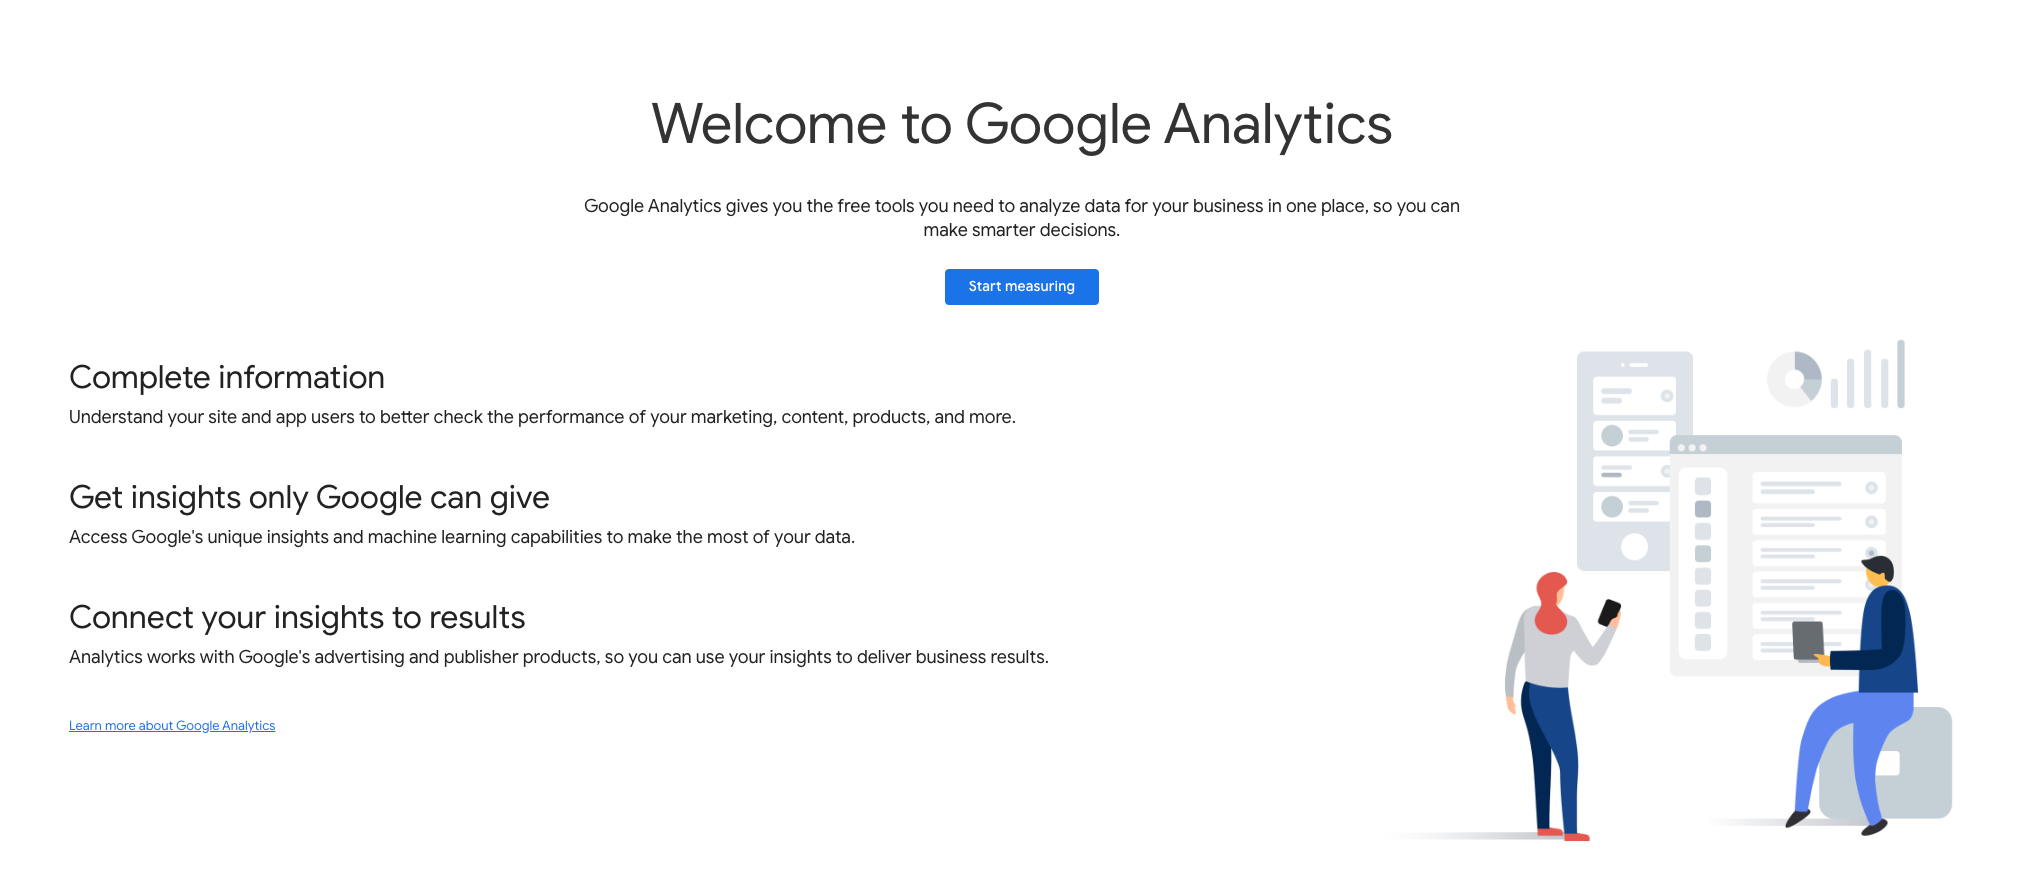 Google Analytics start measuring